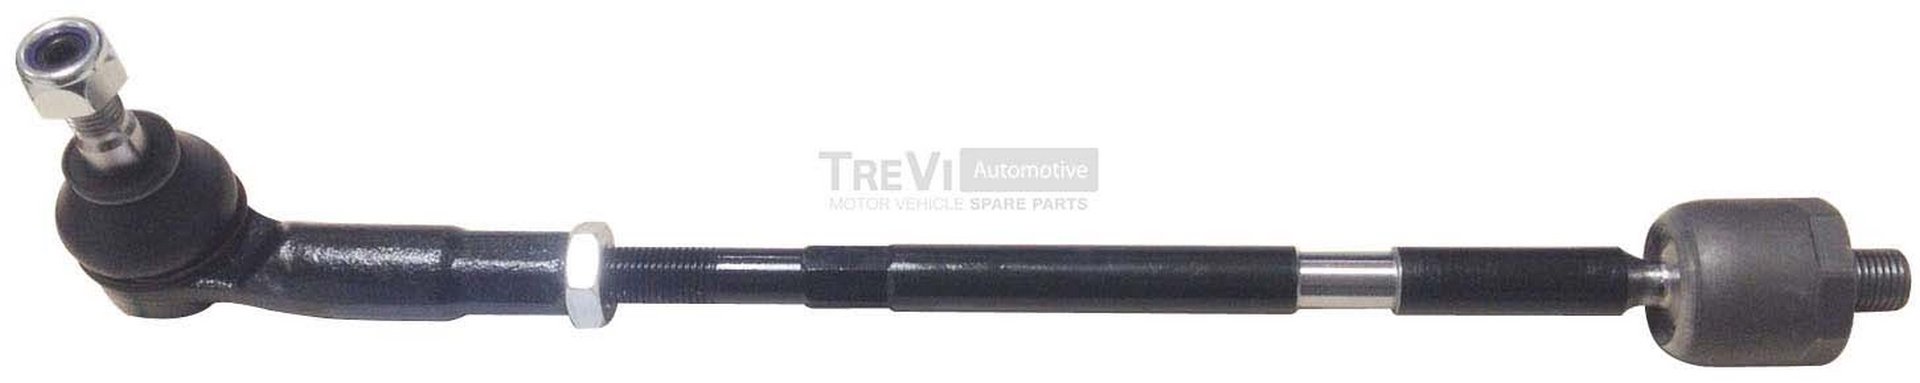 TREVI AUTOMOTIVE TRTT5334